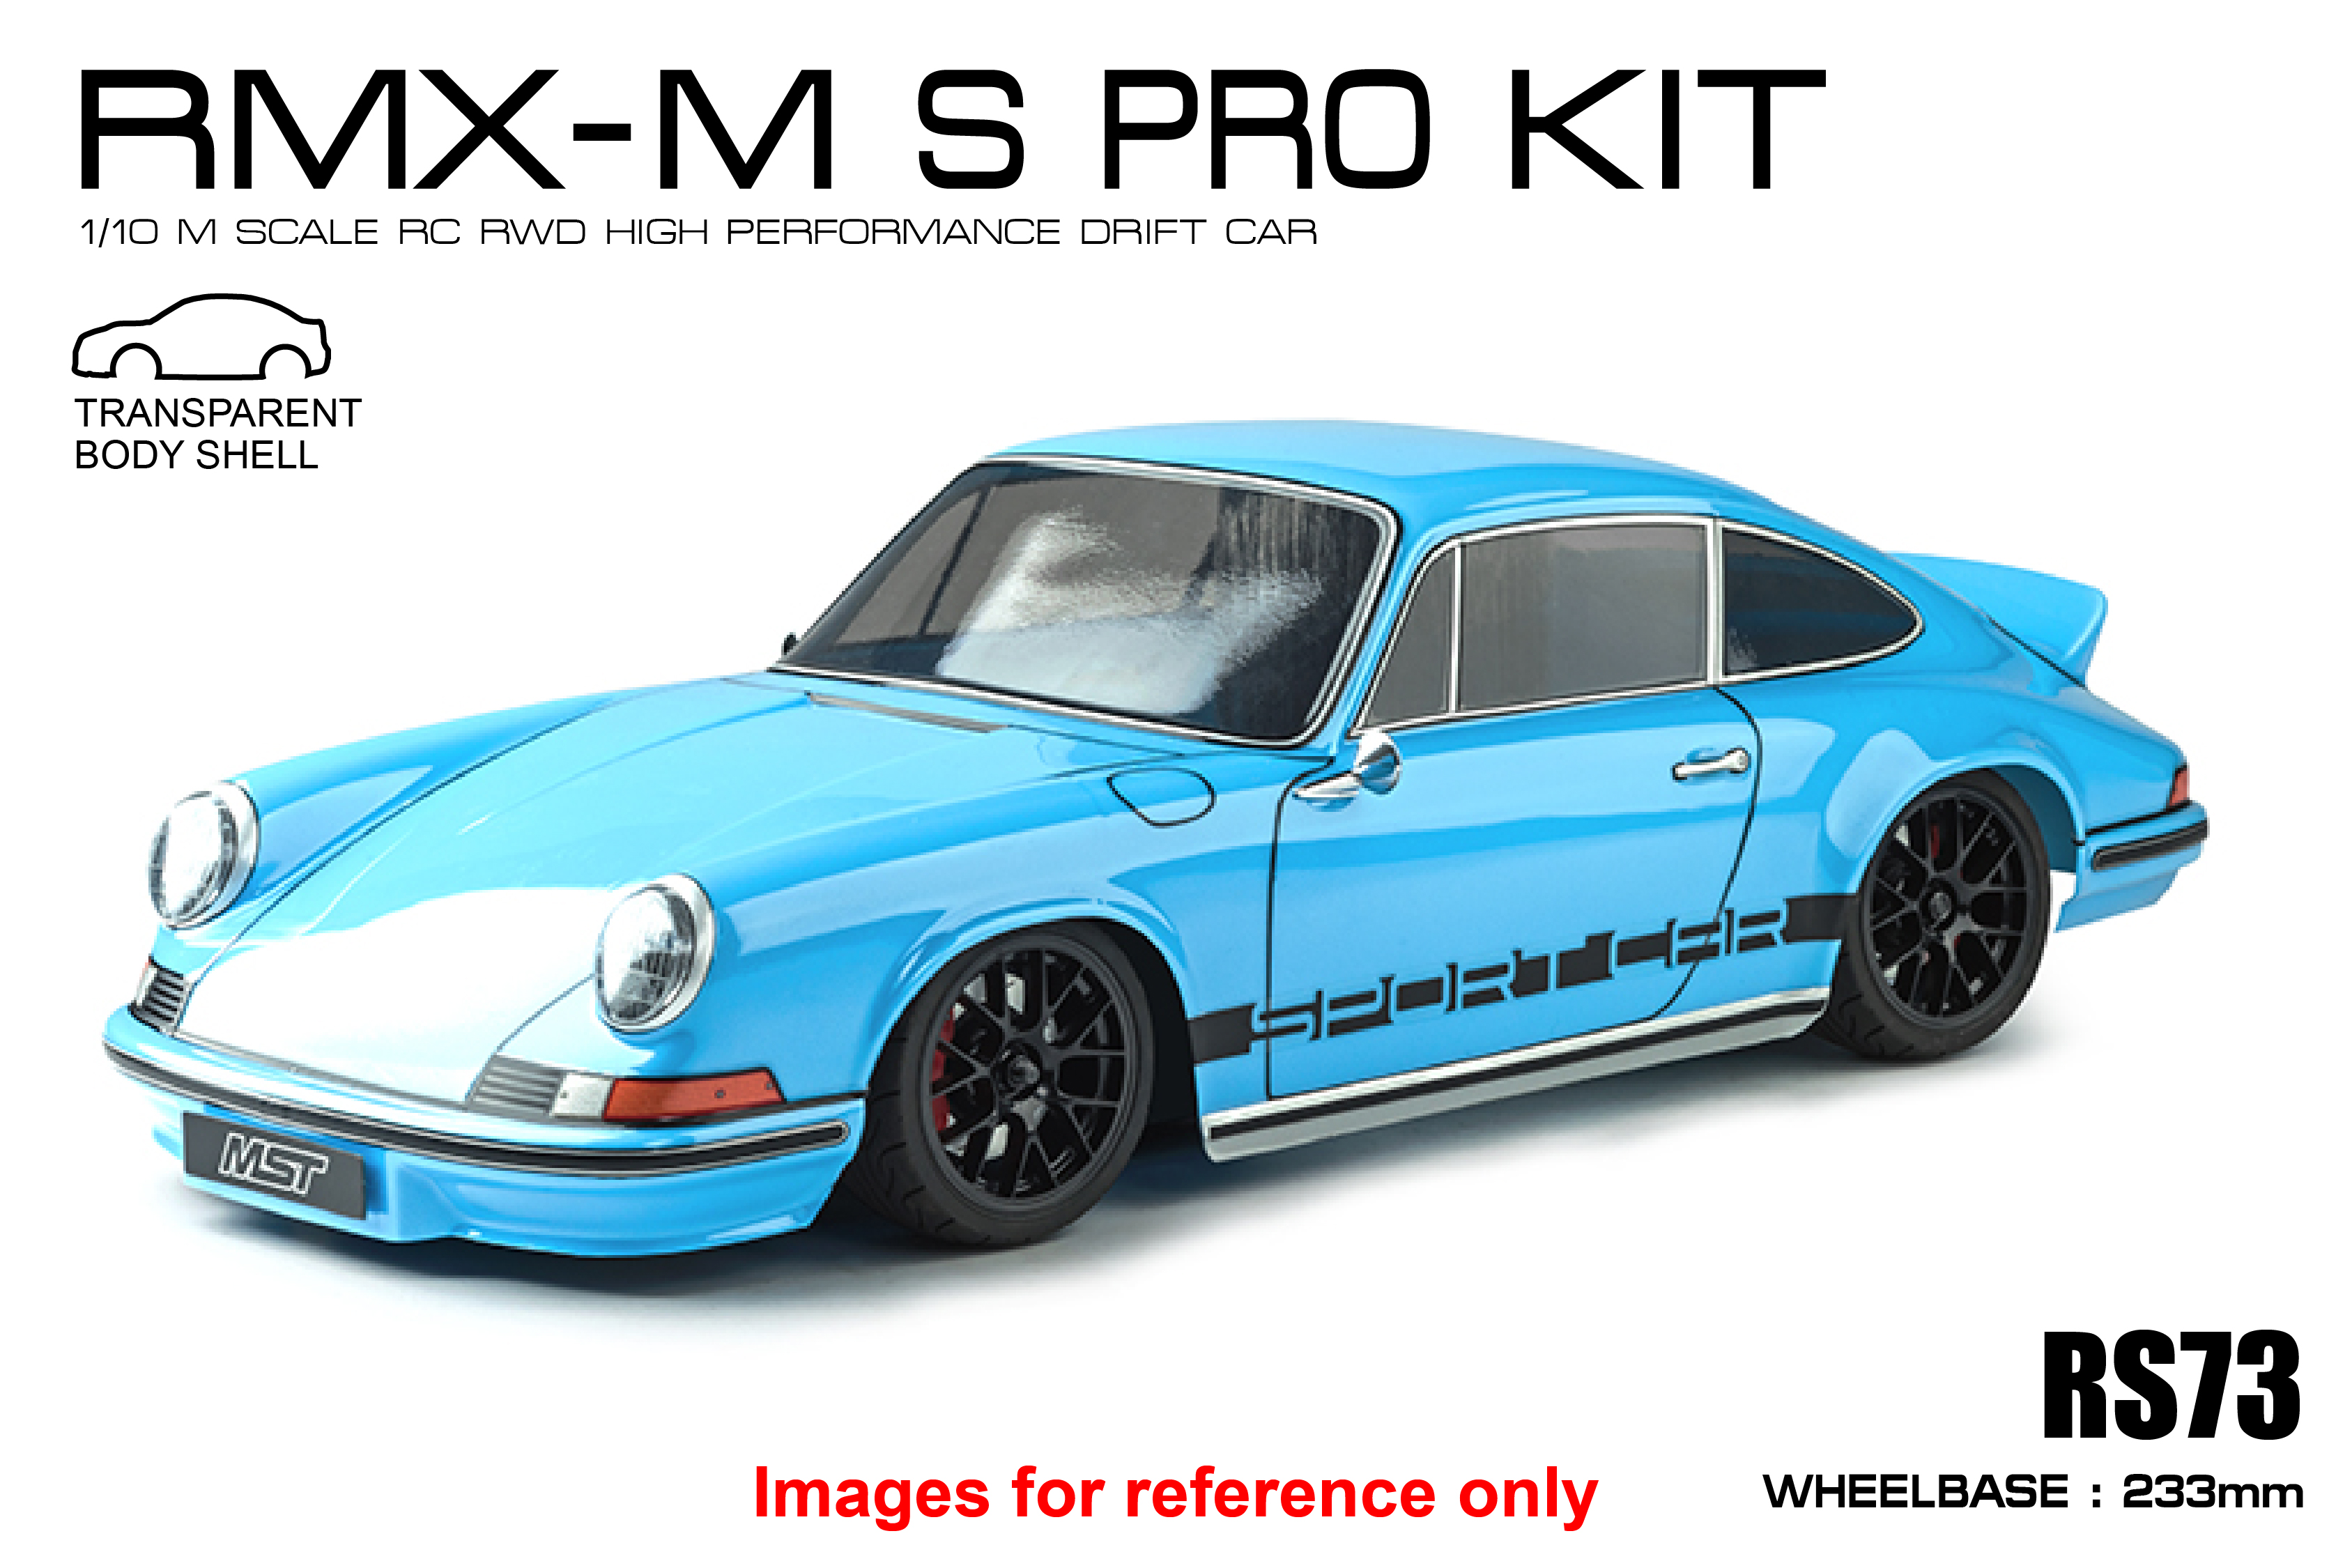 Kayhobbis - Onlineshop for RC Cars - Drift - Crawler - MST RMX-M S